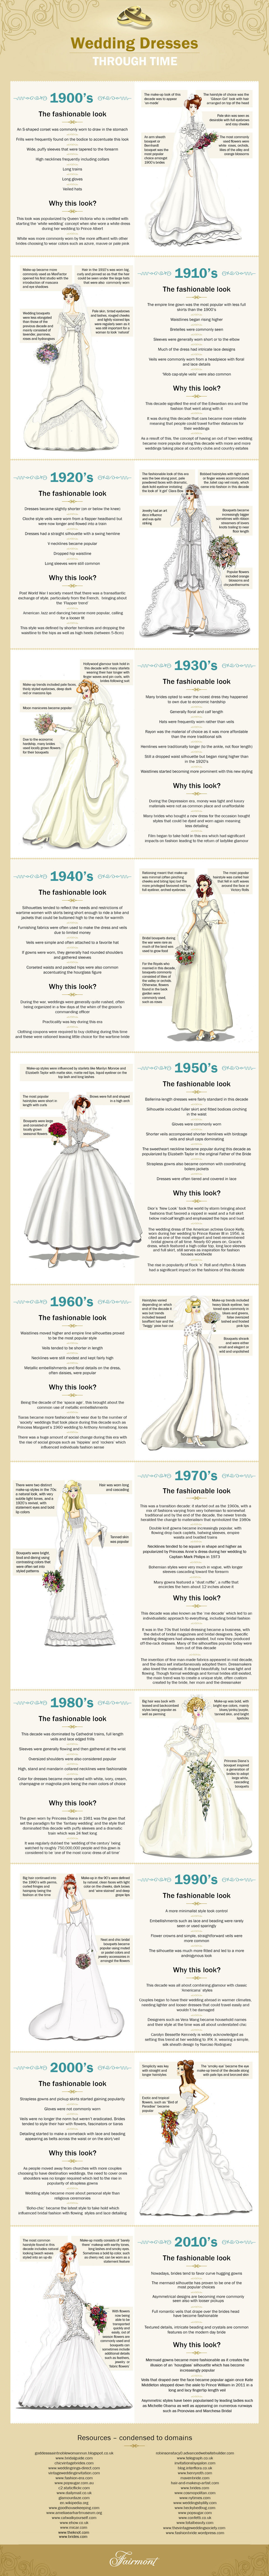 wedding gown trends 